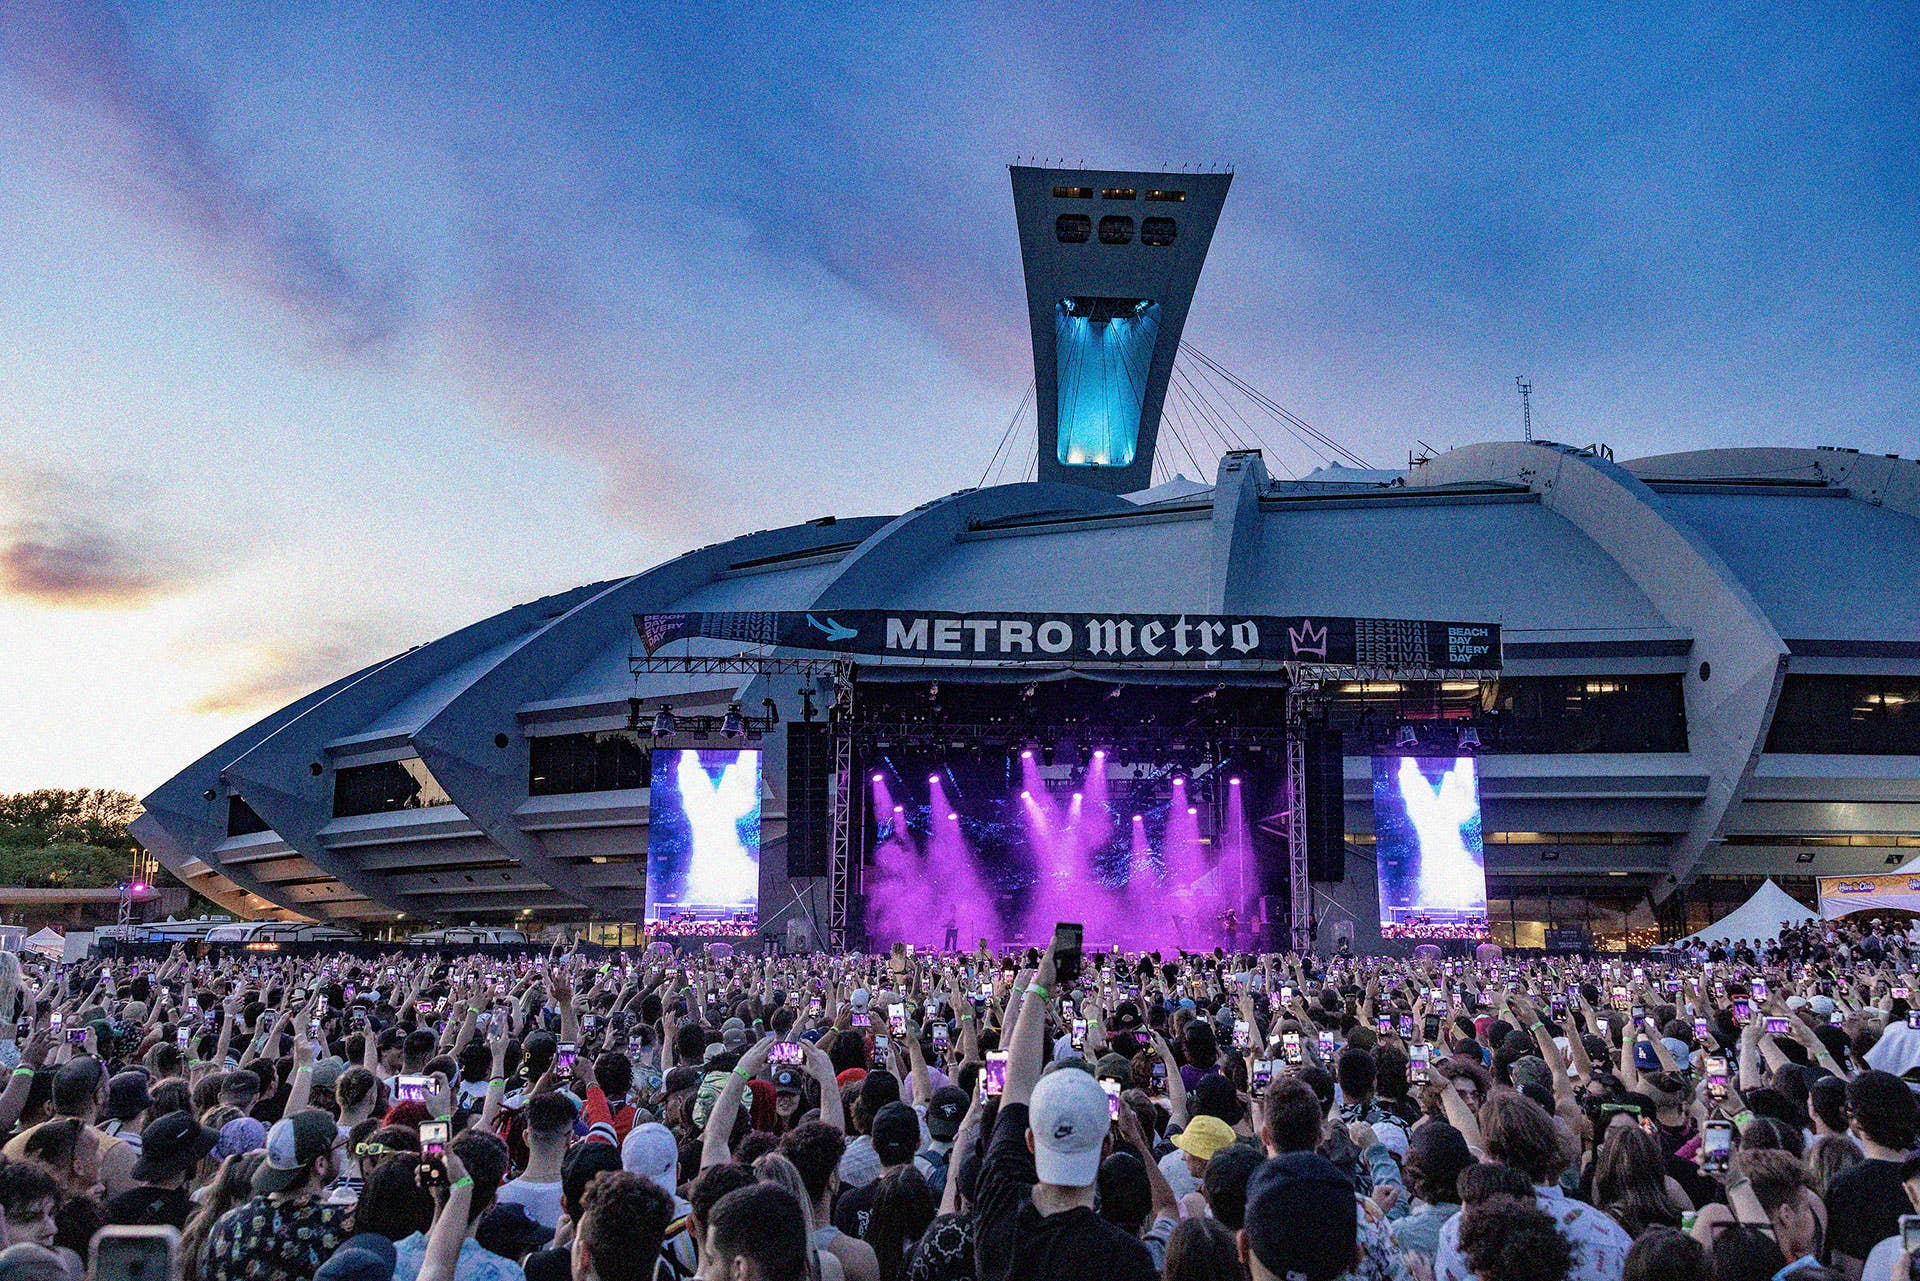 Metro Metro festival in Montreal